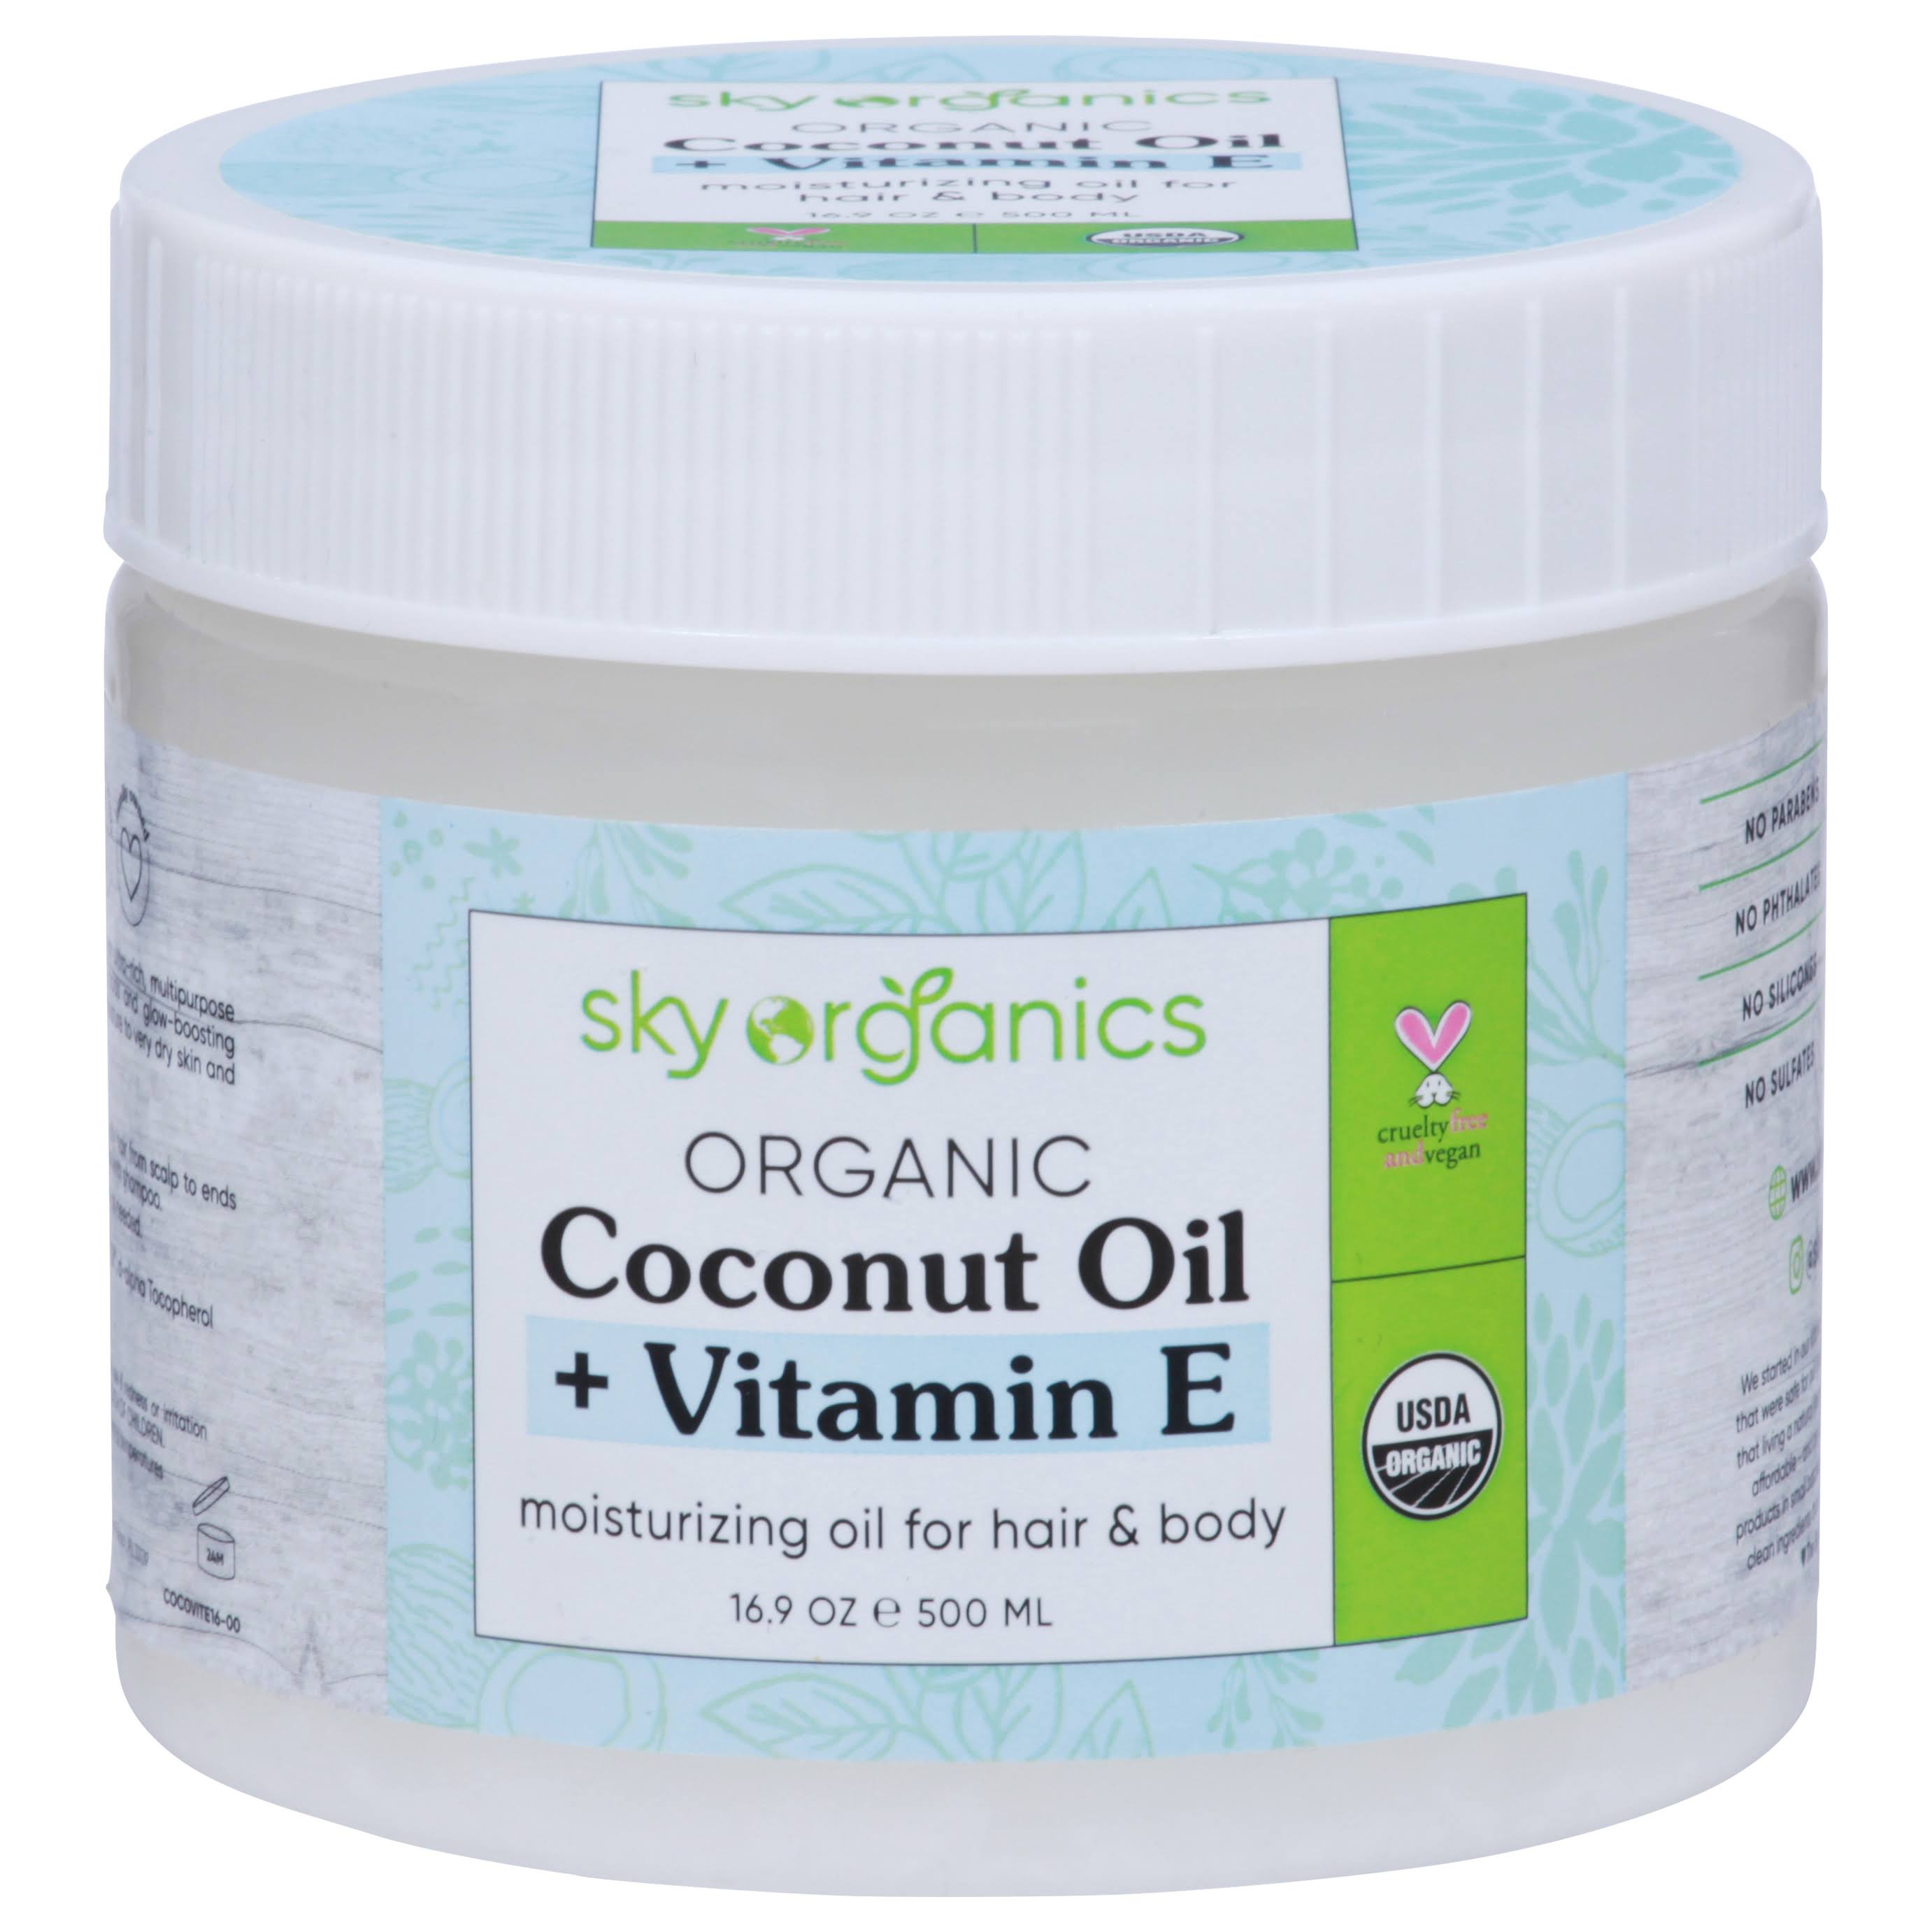 Sky Organics Coconut Oil + Vitamin E, Organic - 16.9 oz